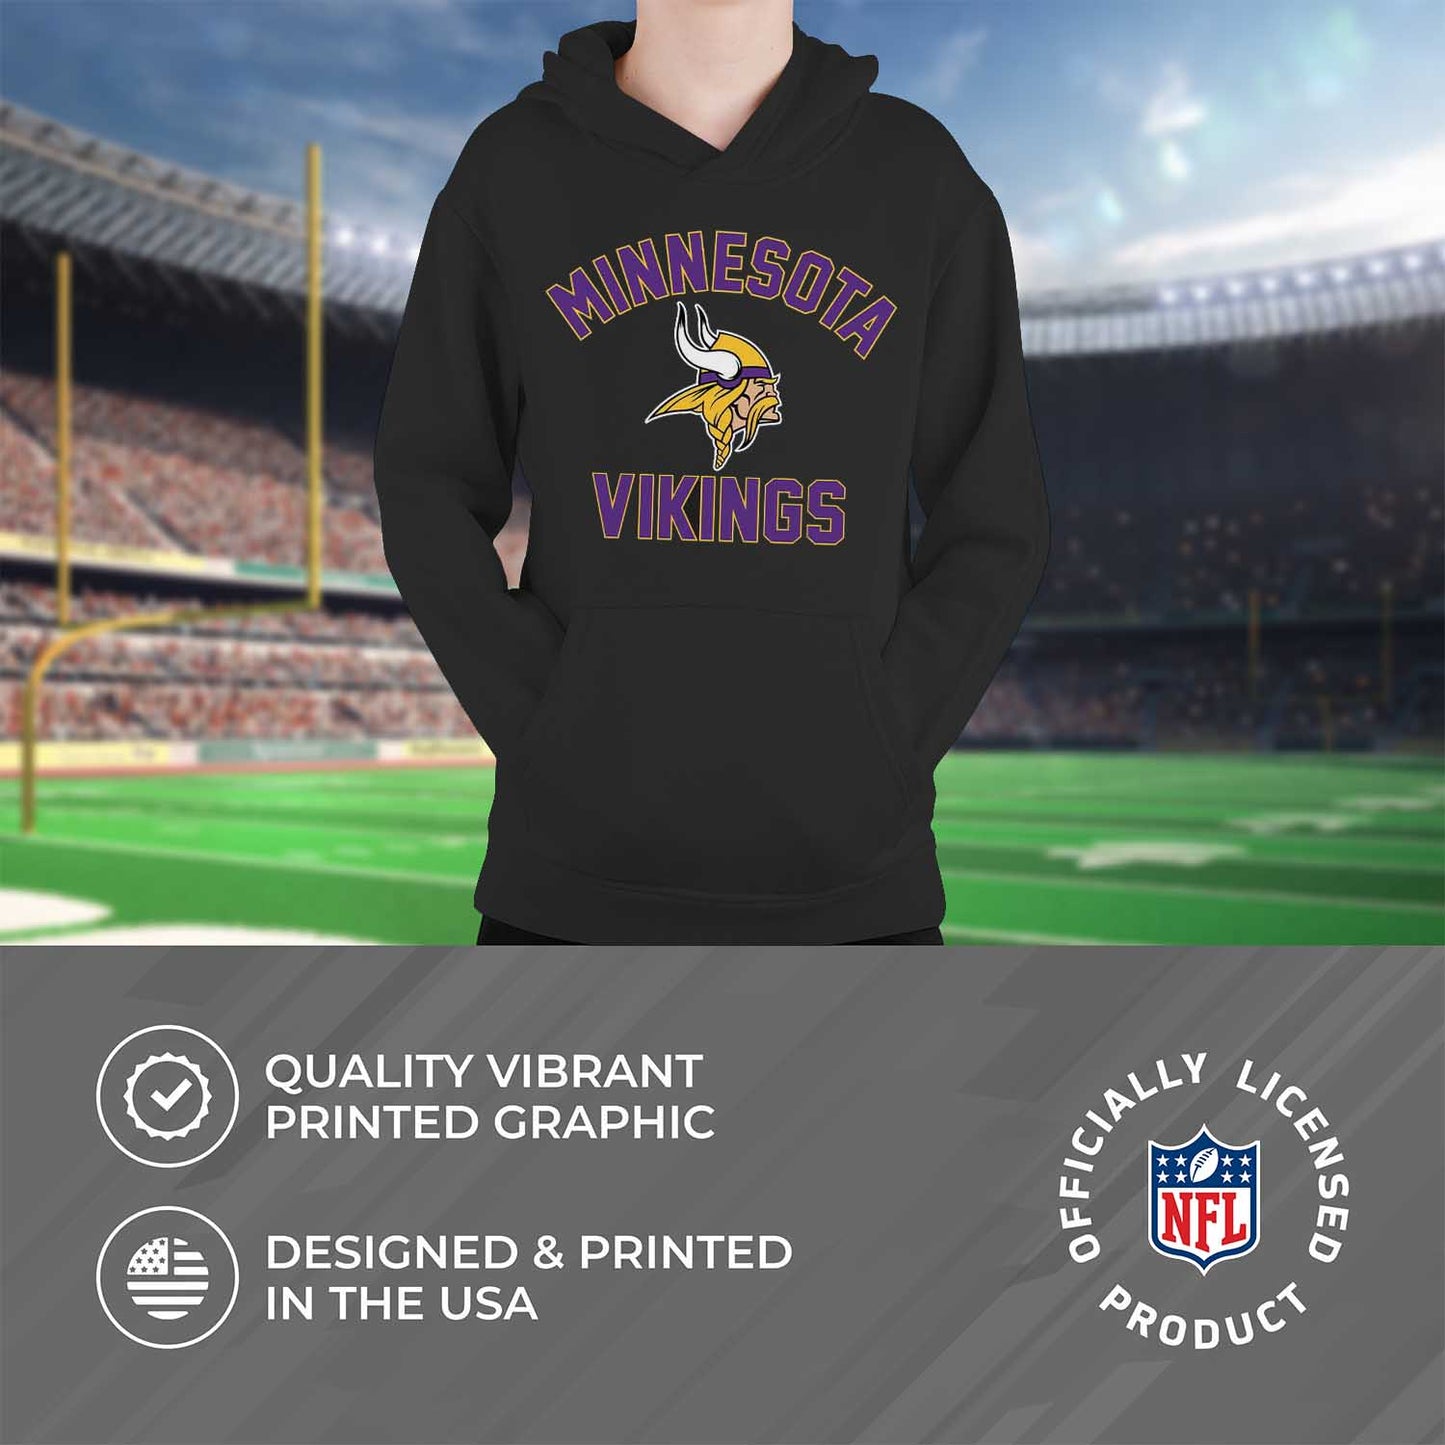 Minnesota Vikings NFL Youth Gameday Hooded Sweatshirt - Black